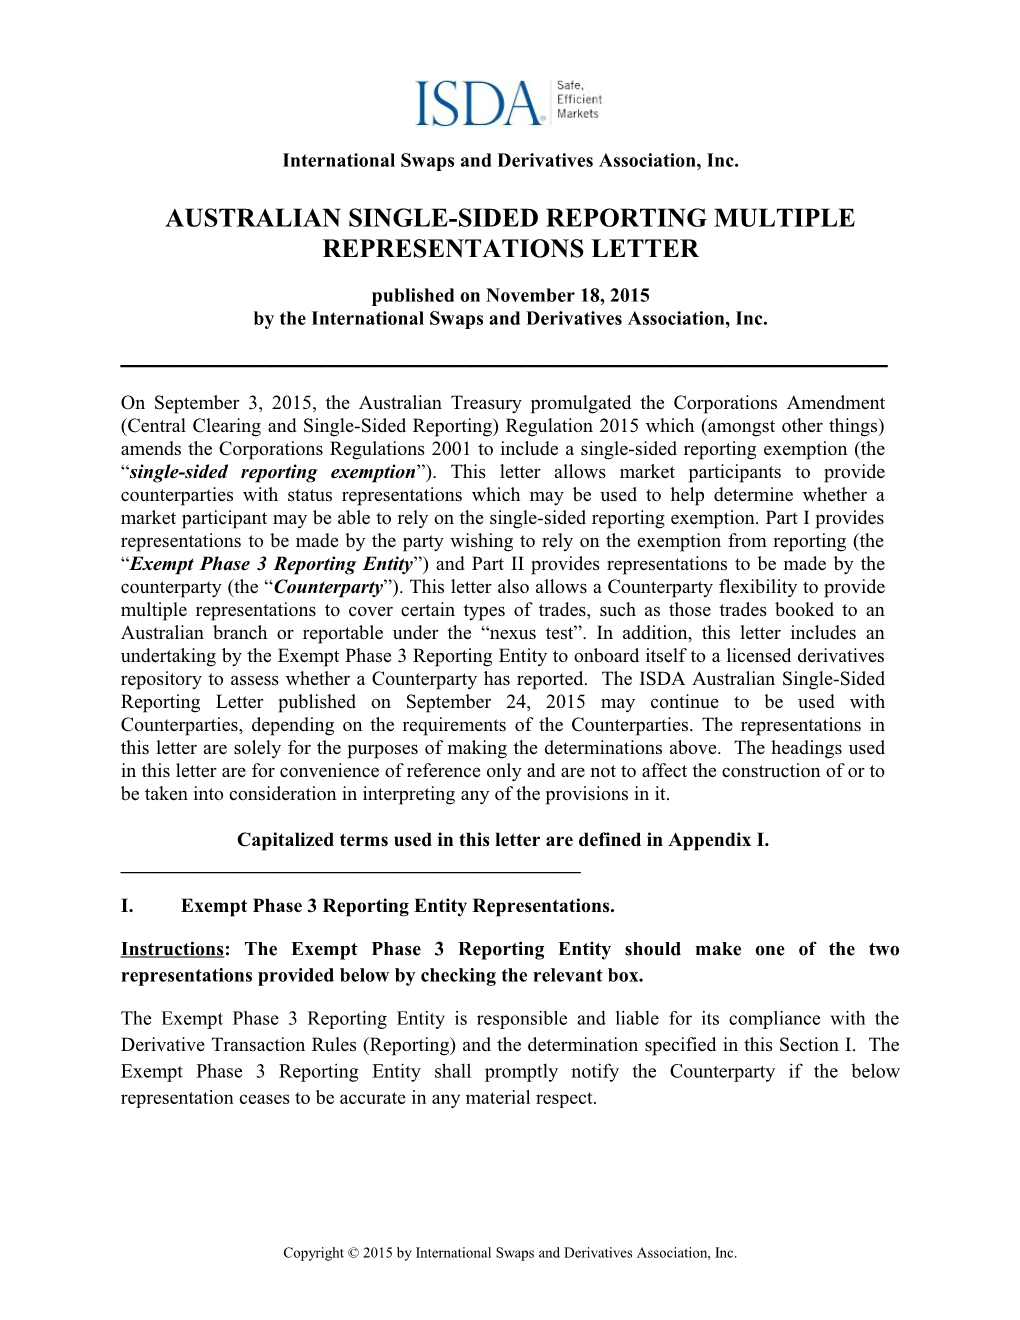 ISDA Australian Single-Sided Reporting Letter s1